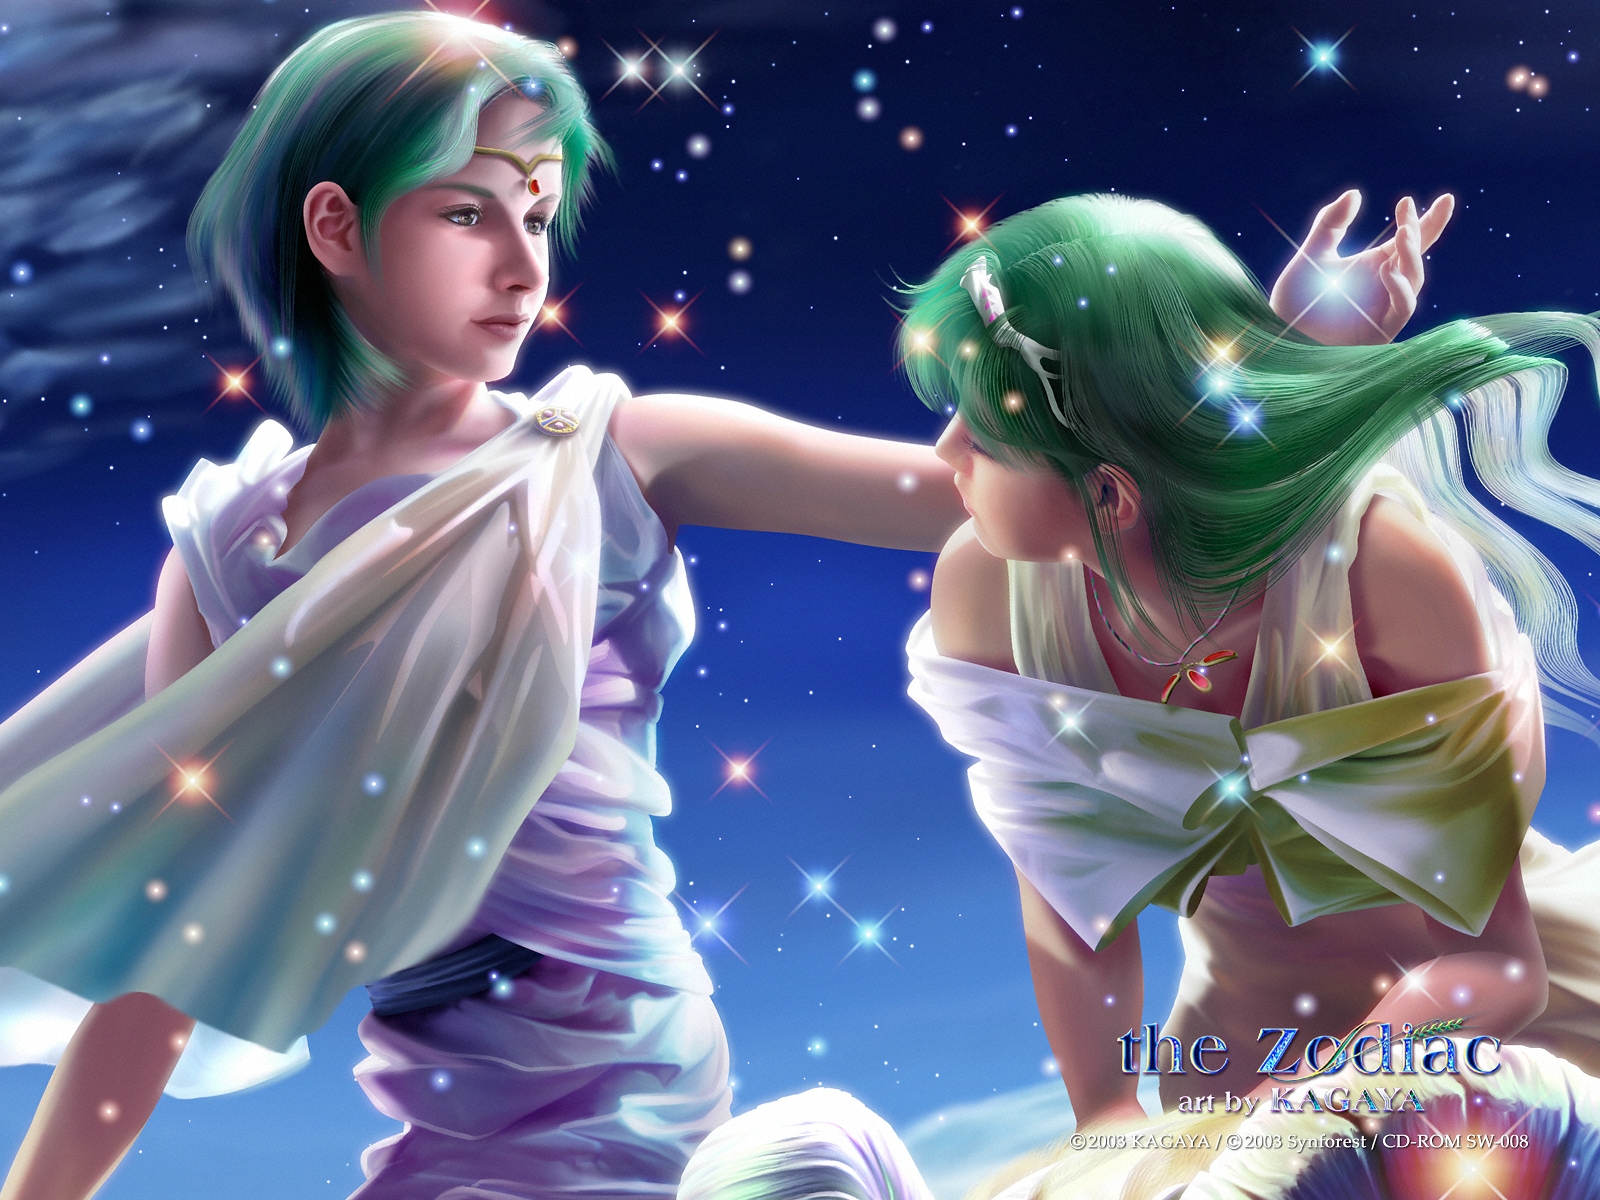 General 1600x1200 kagaya constellations fantasy art green hair women two women